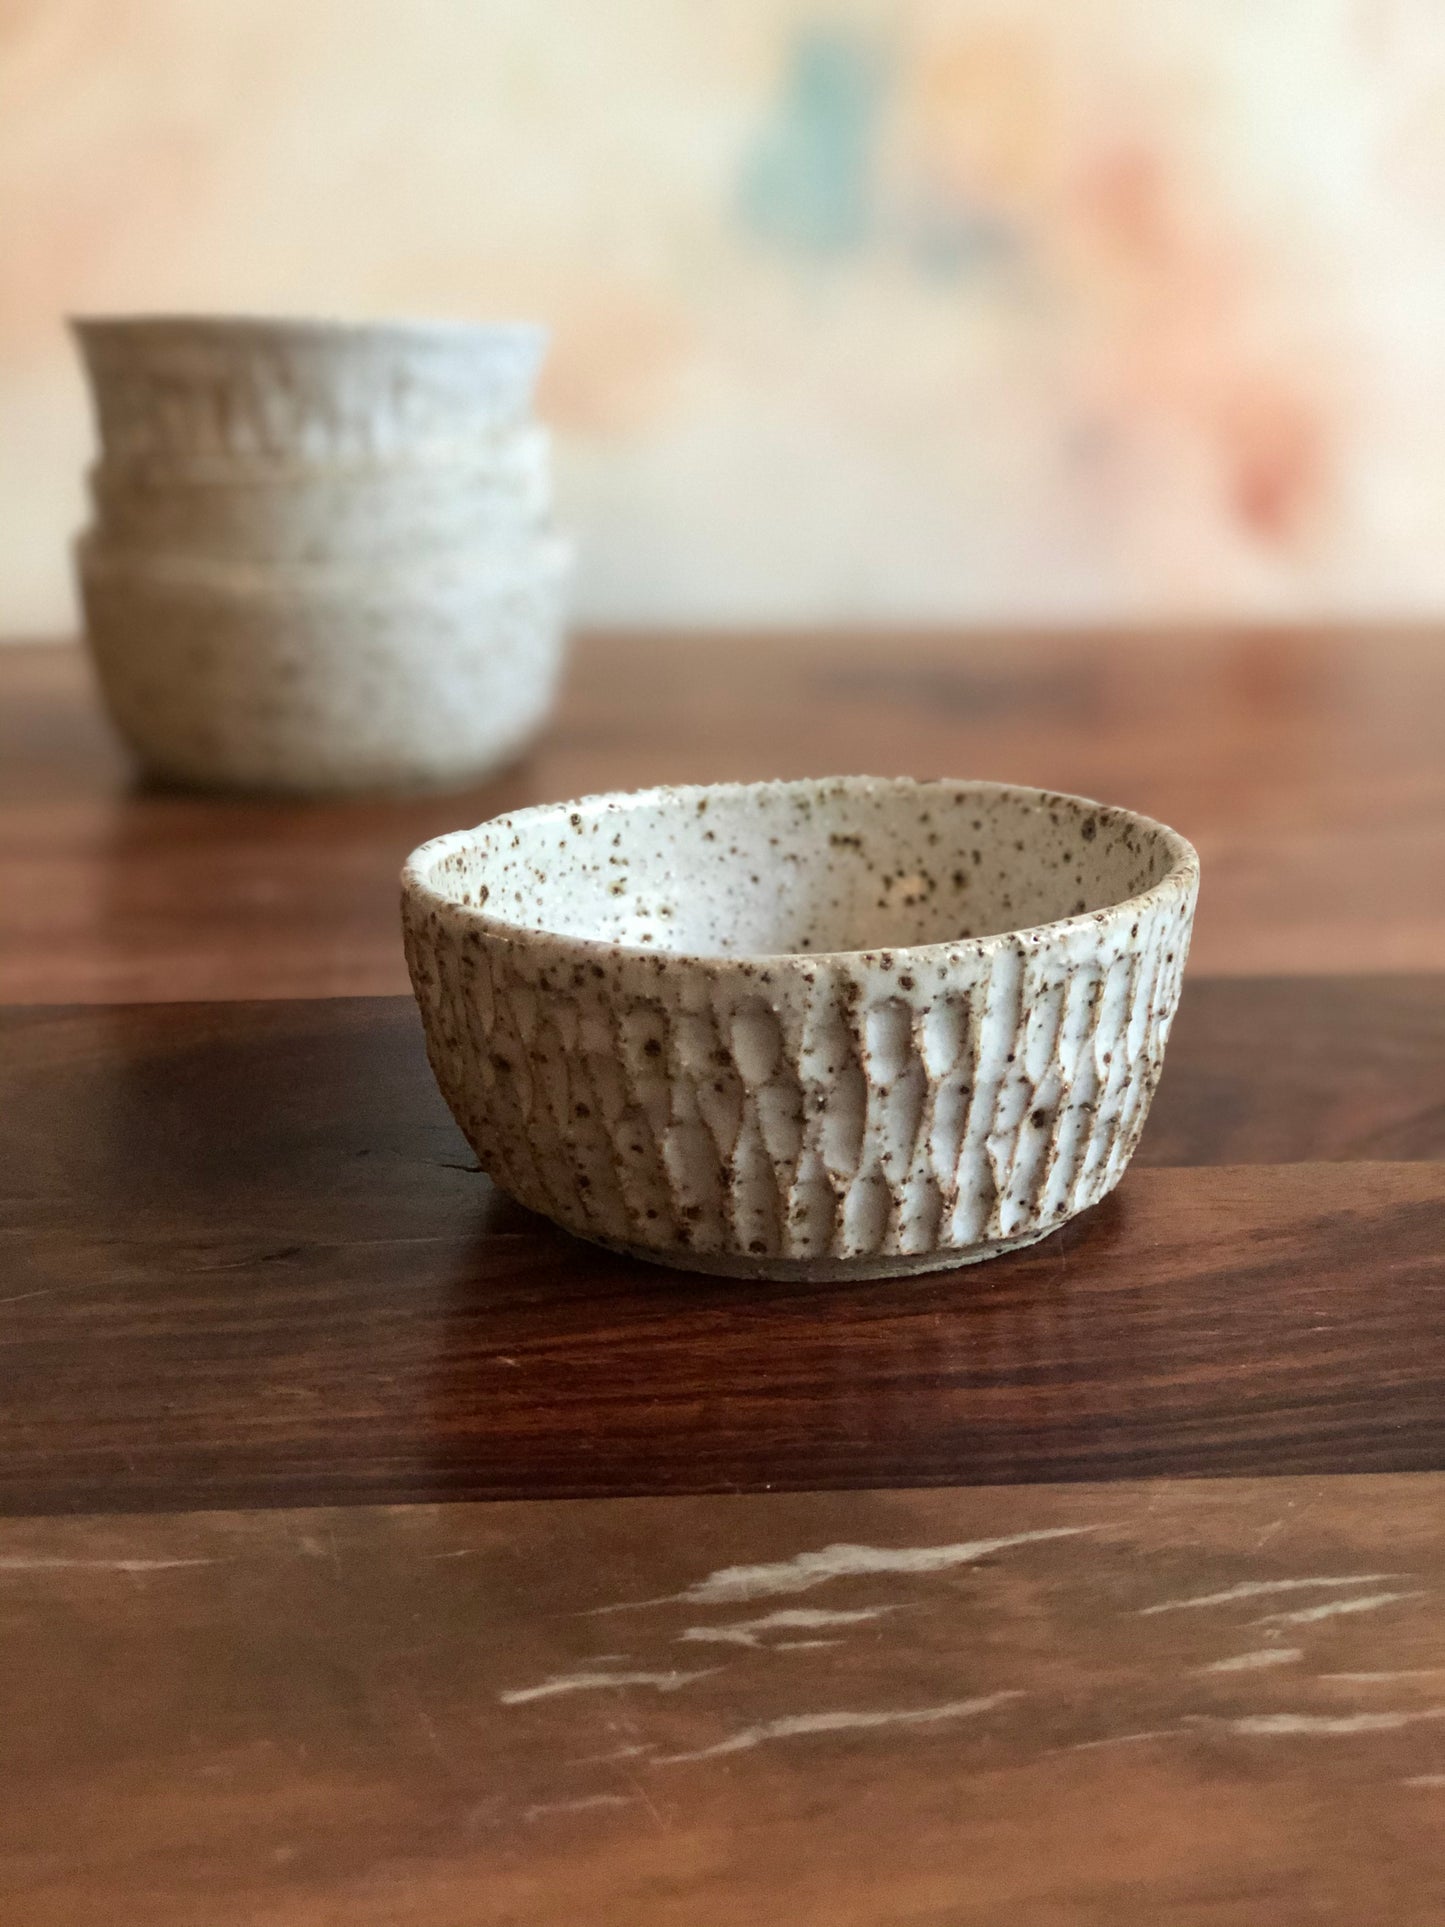 Tiny bowls or salt cellars